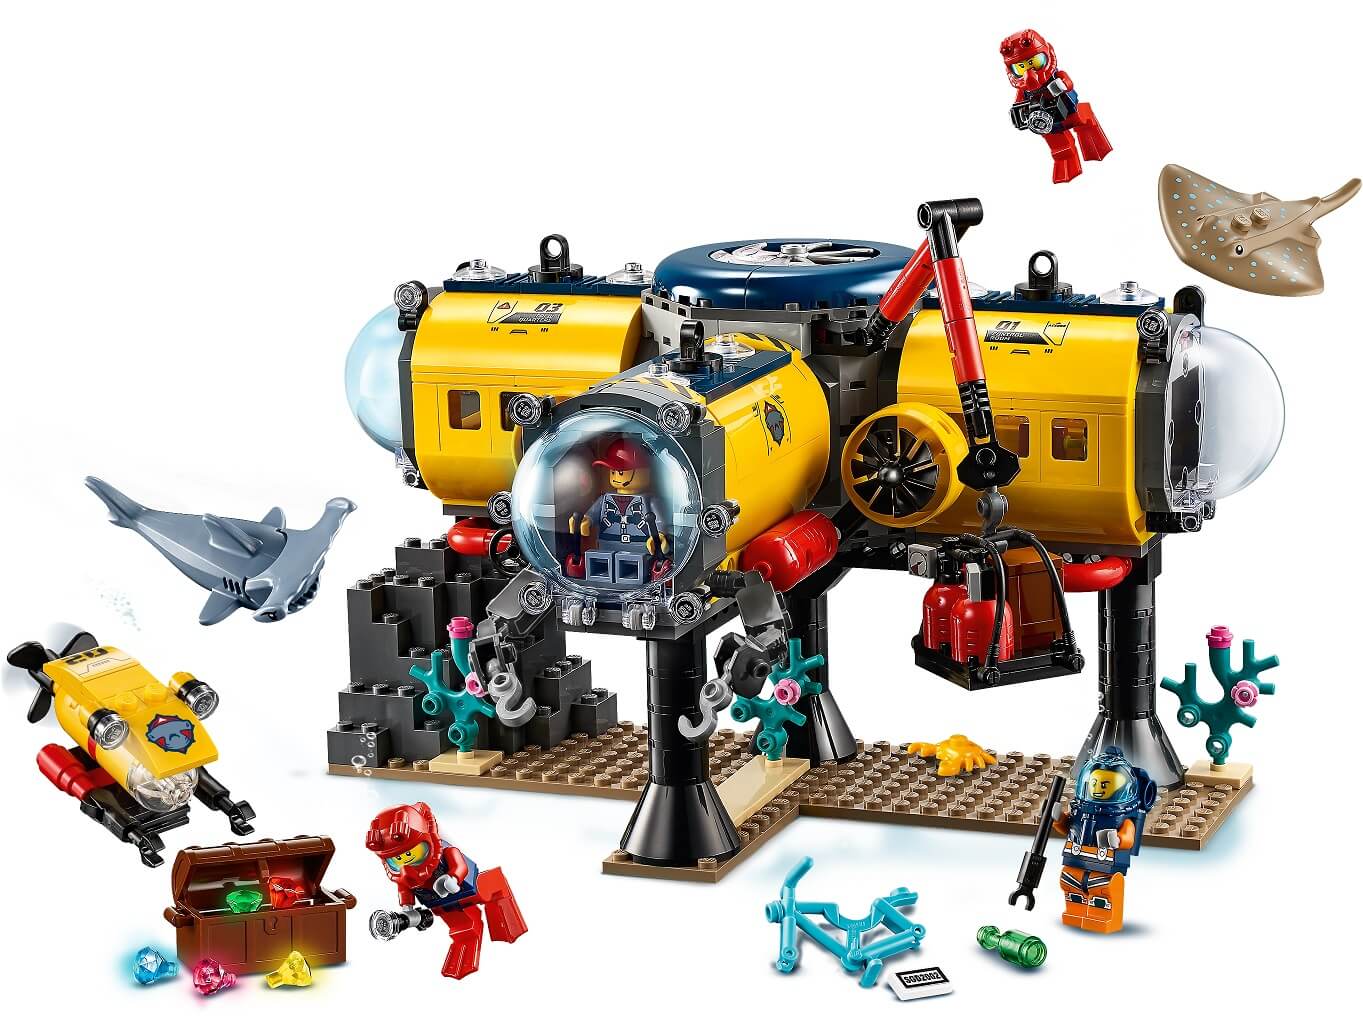 Base de Exploracion Oceanica ( Lego 60265 ) imagen a